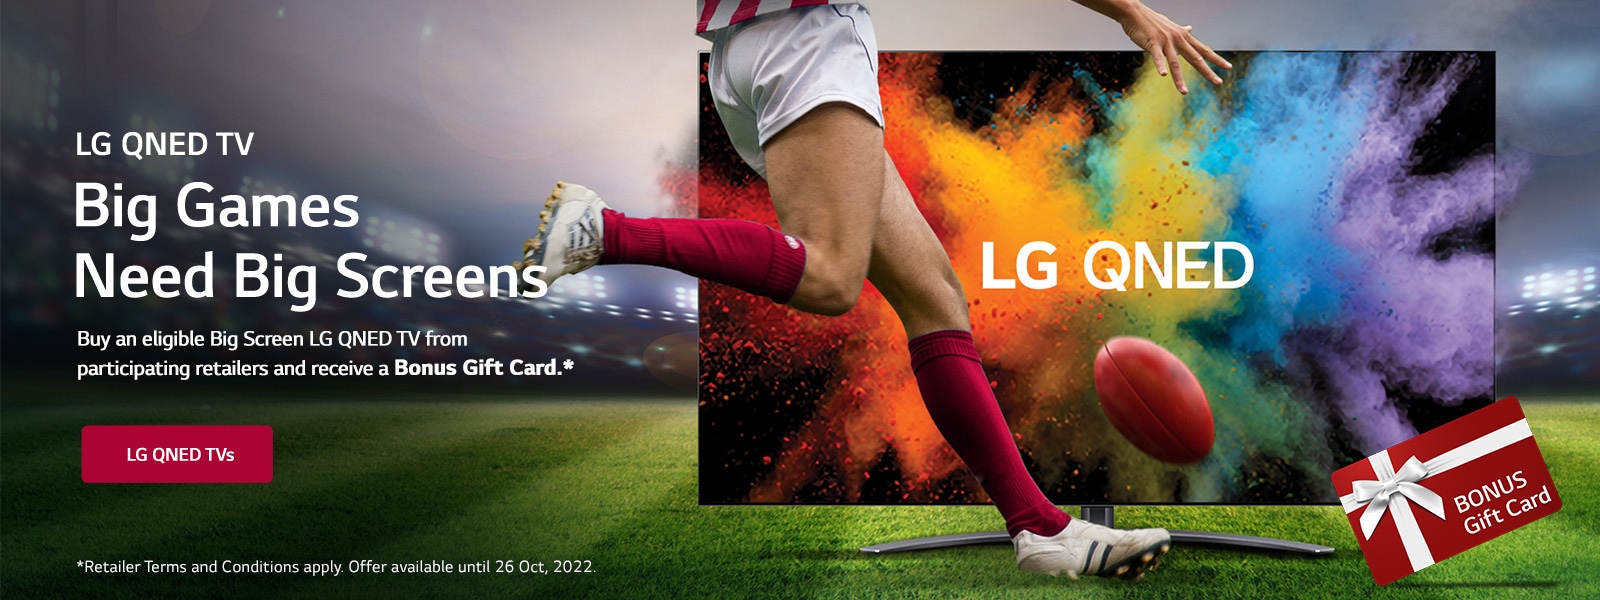 Receive a Bonus gift card when you buy an eligible Big Screen LG QNED TV